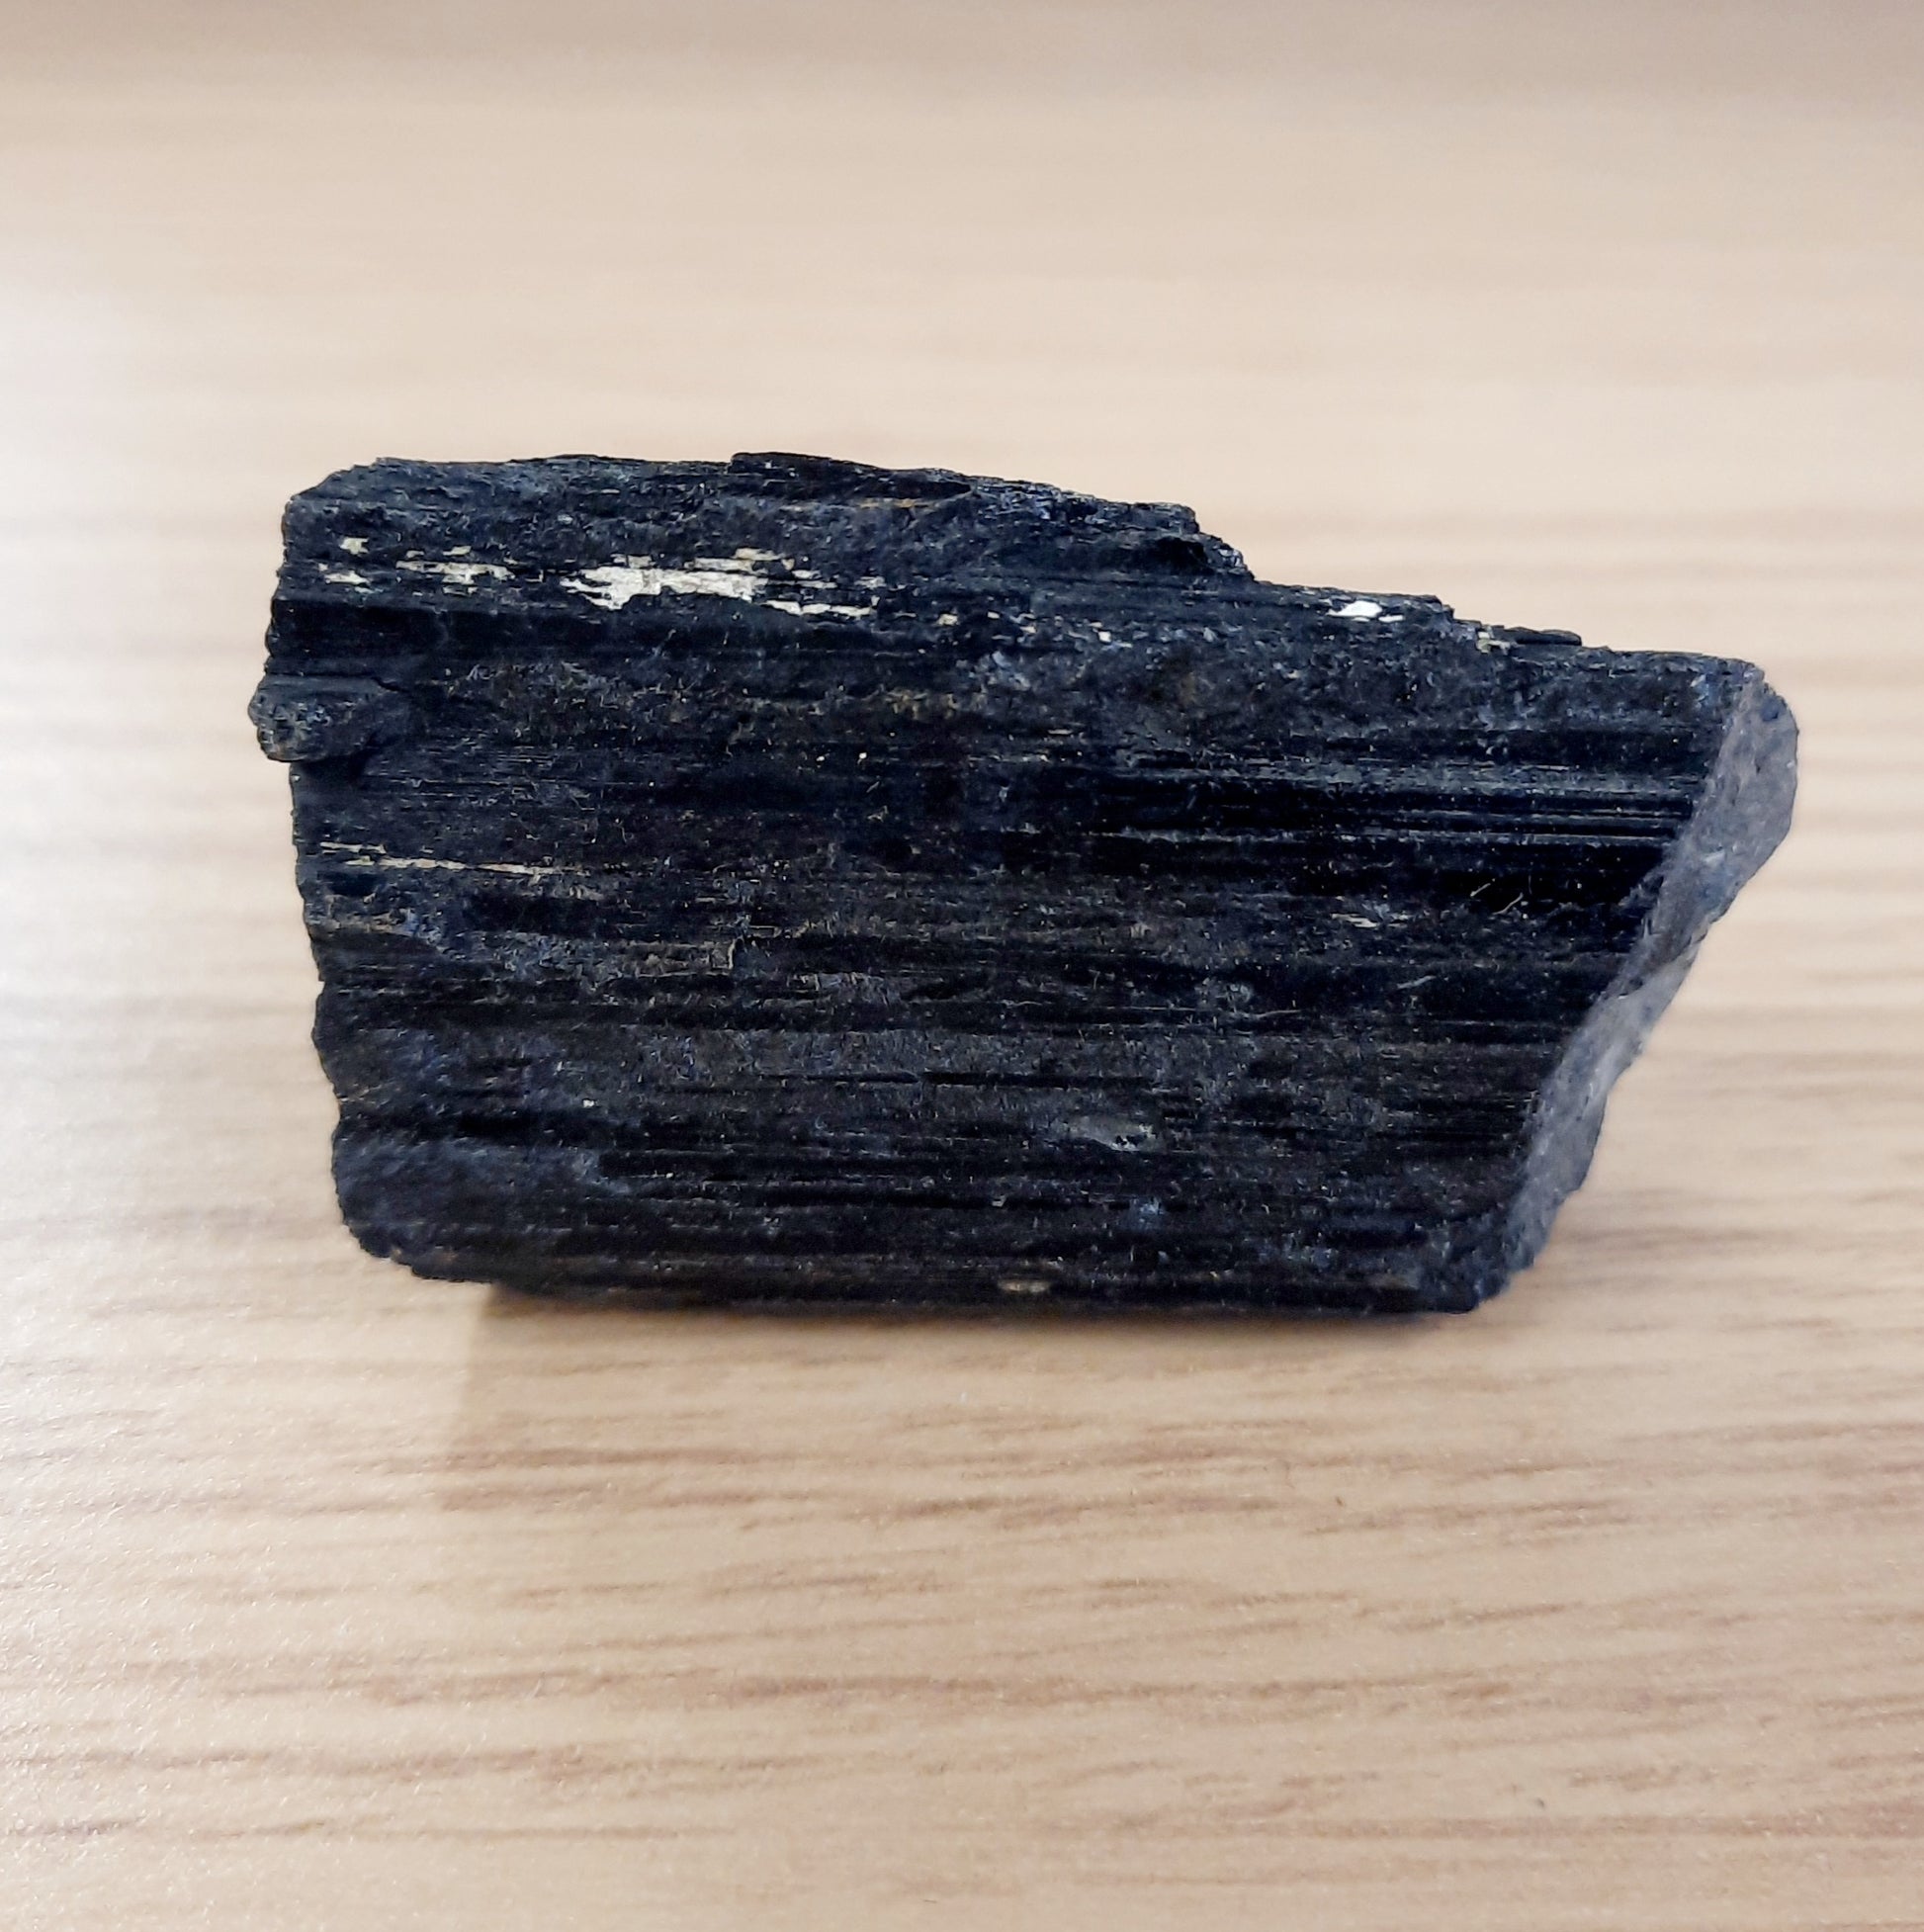 Rough black tourmaline specimen crystals